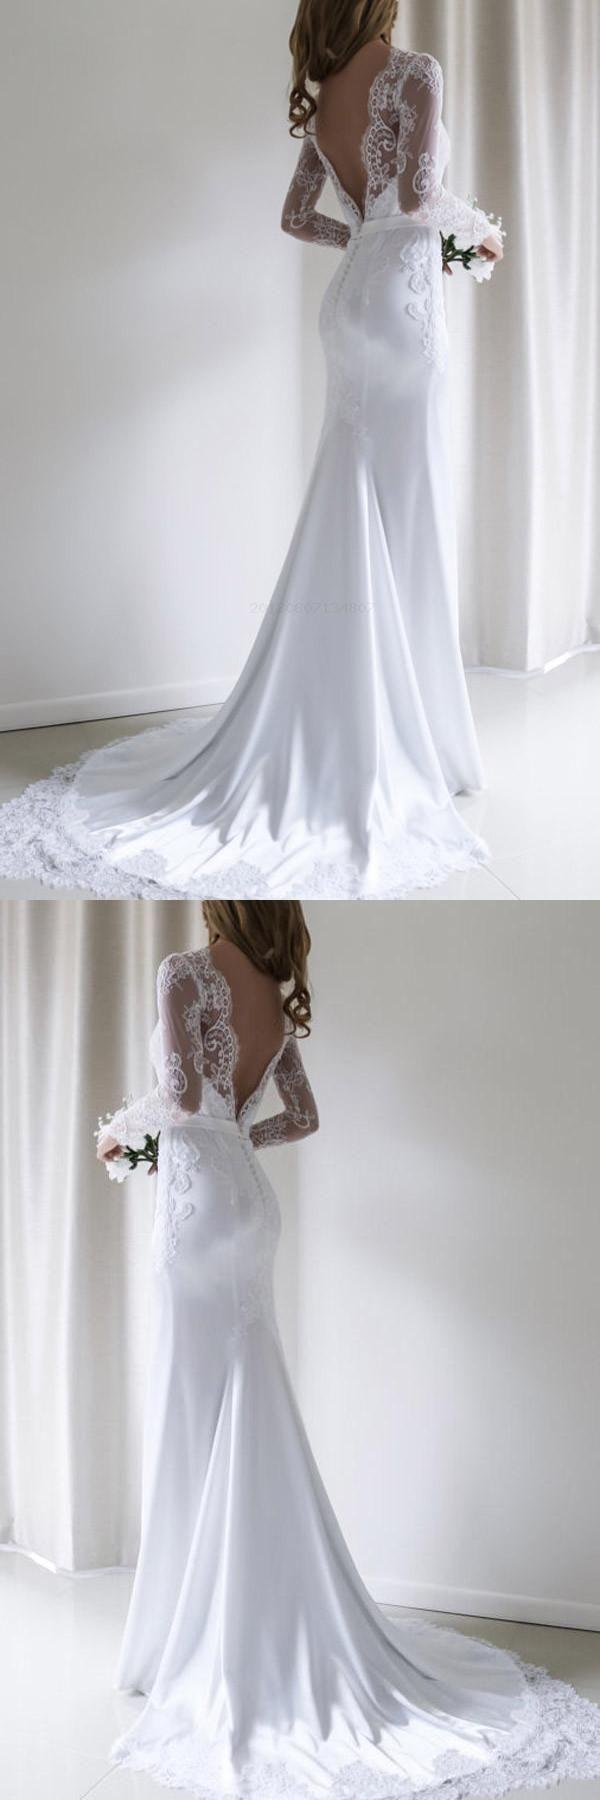 Wedding - Hot Sale Admirable Mermaid Wedding Dresses Elegant Lace Long Sleeves Mermaid White Long Wedding Dress With Train